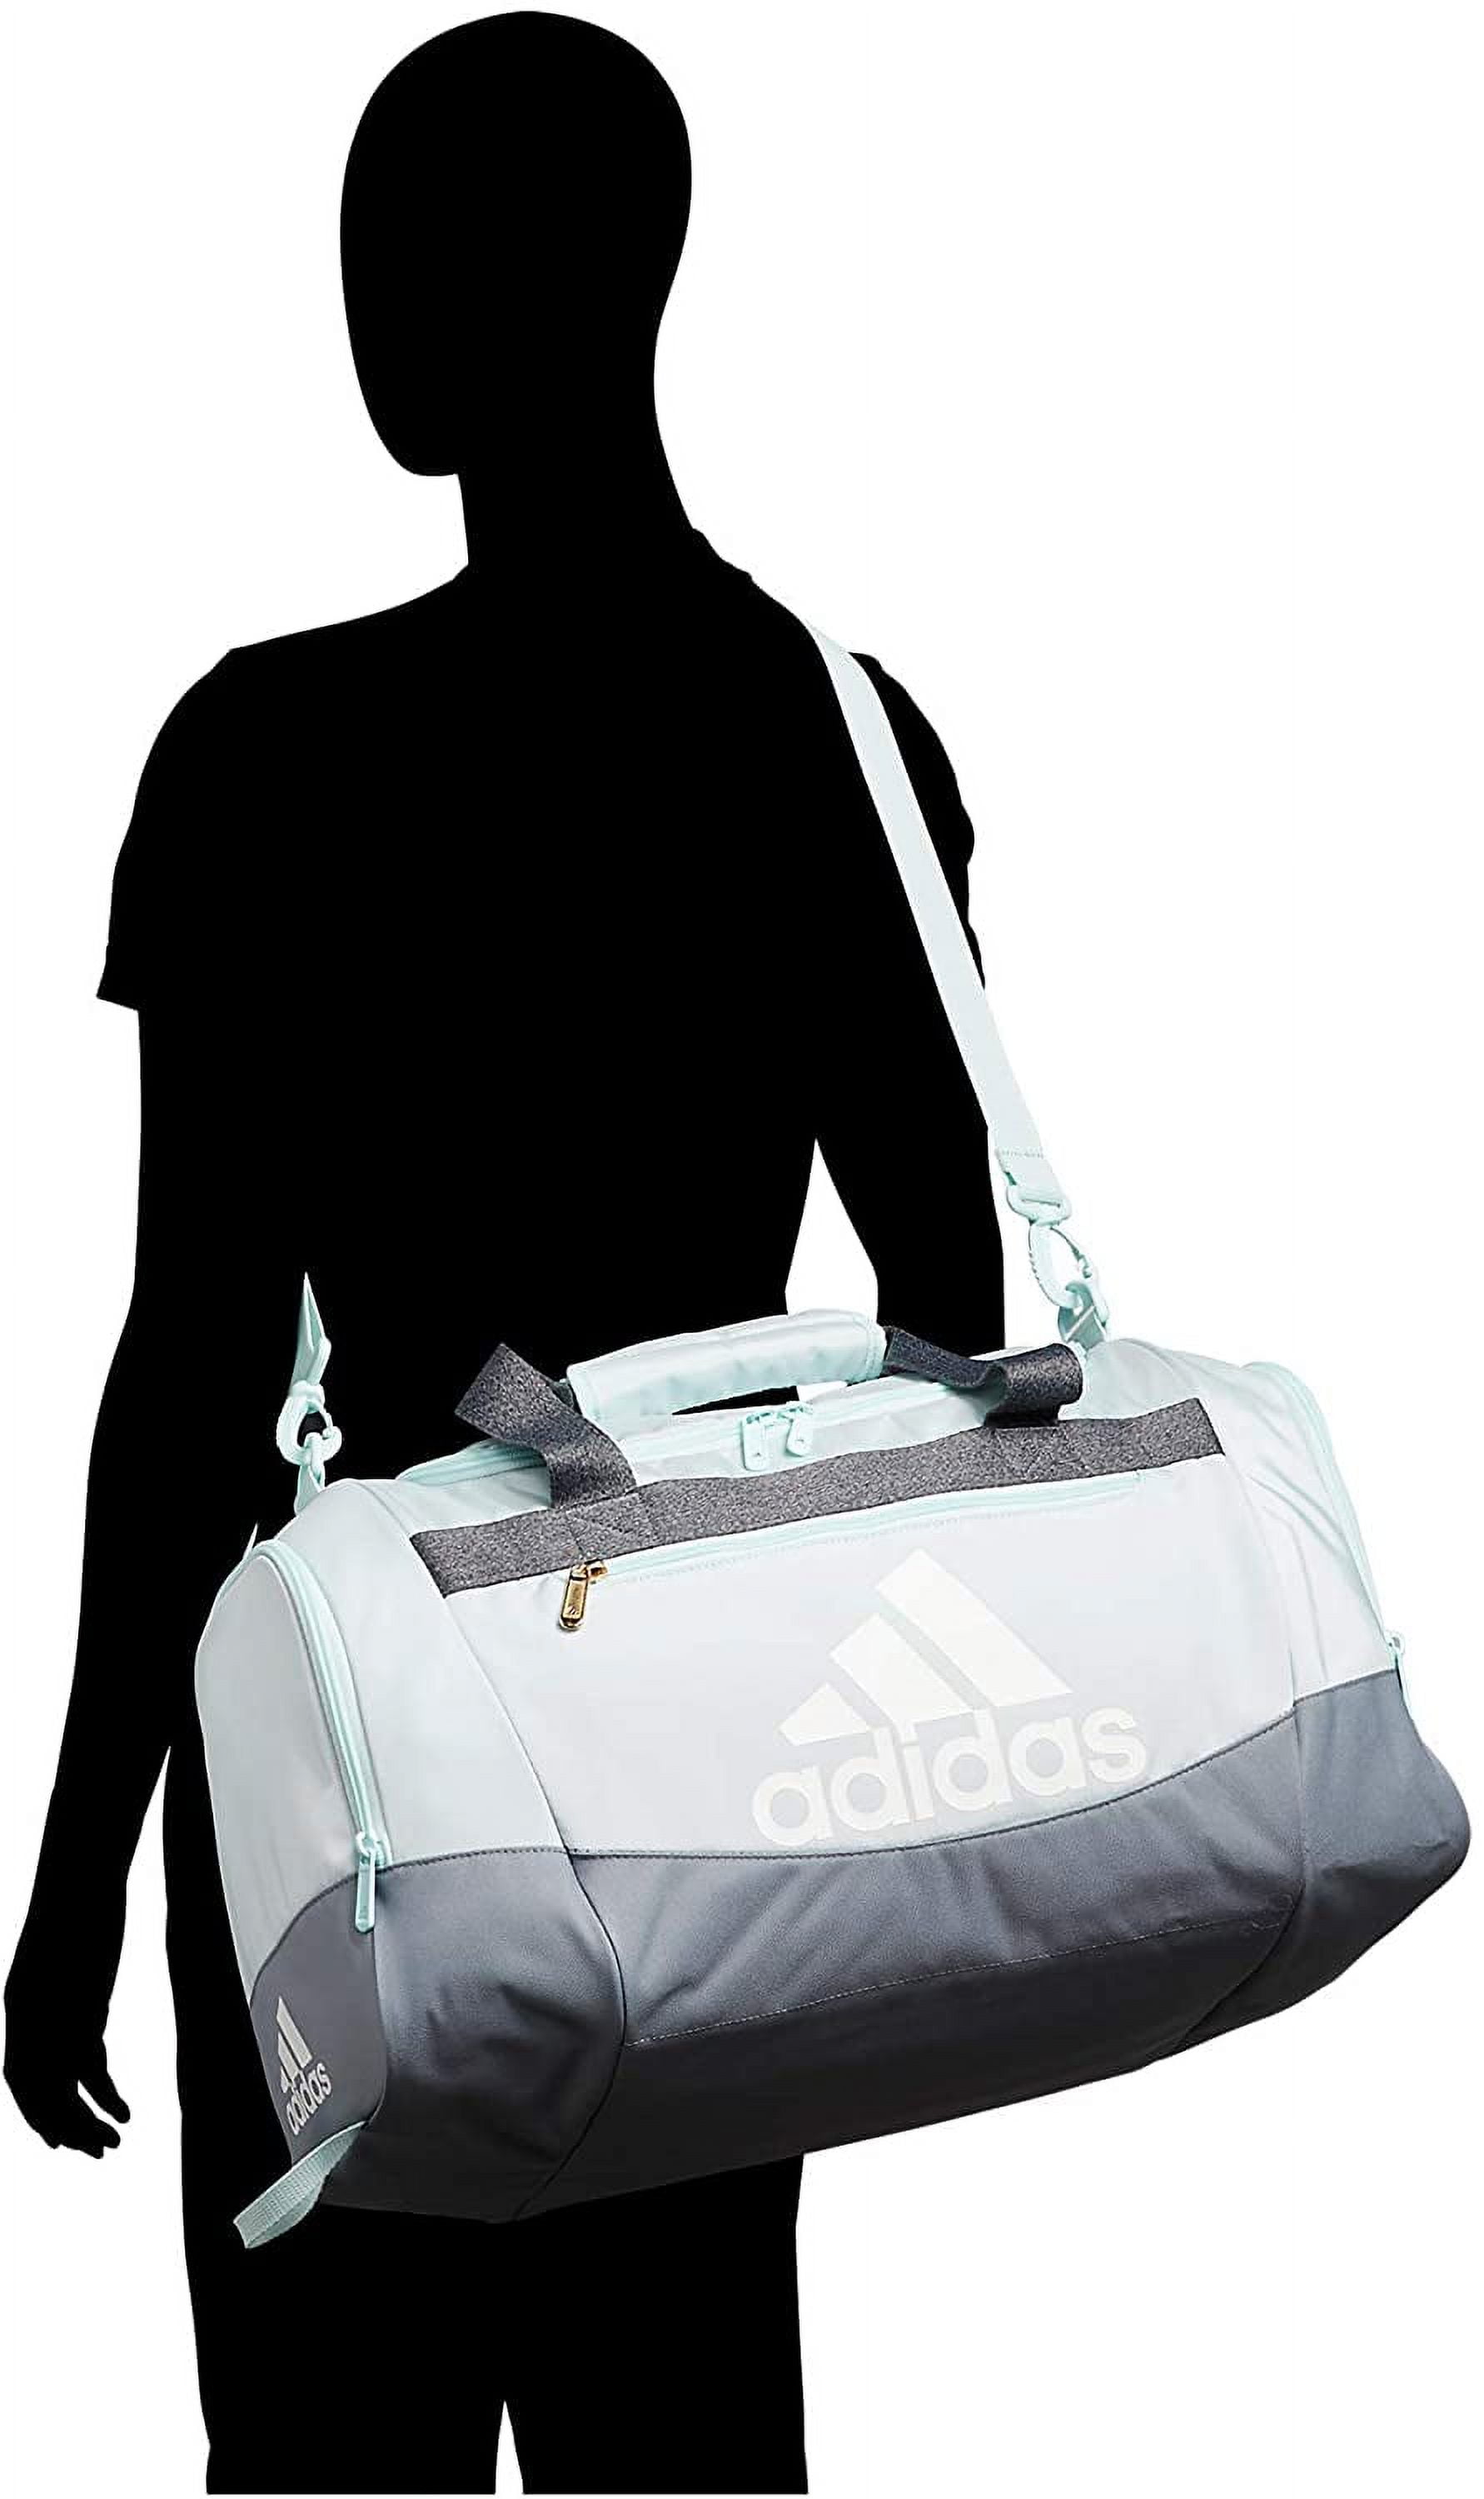 womens adidas defender iv small duffel bag 20.5”x11.75”x11"